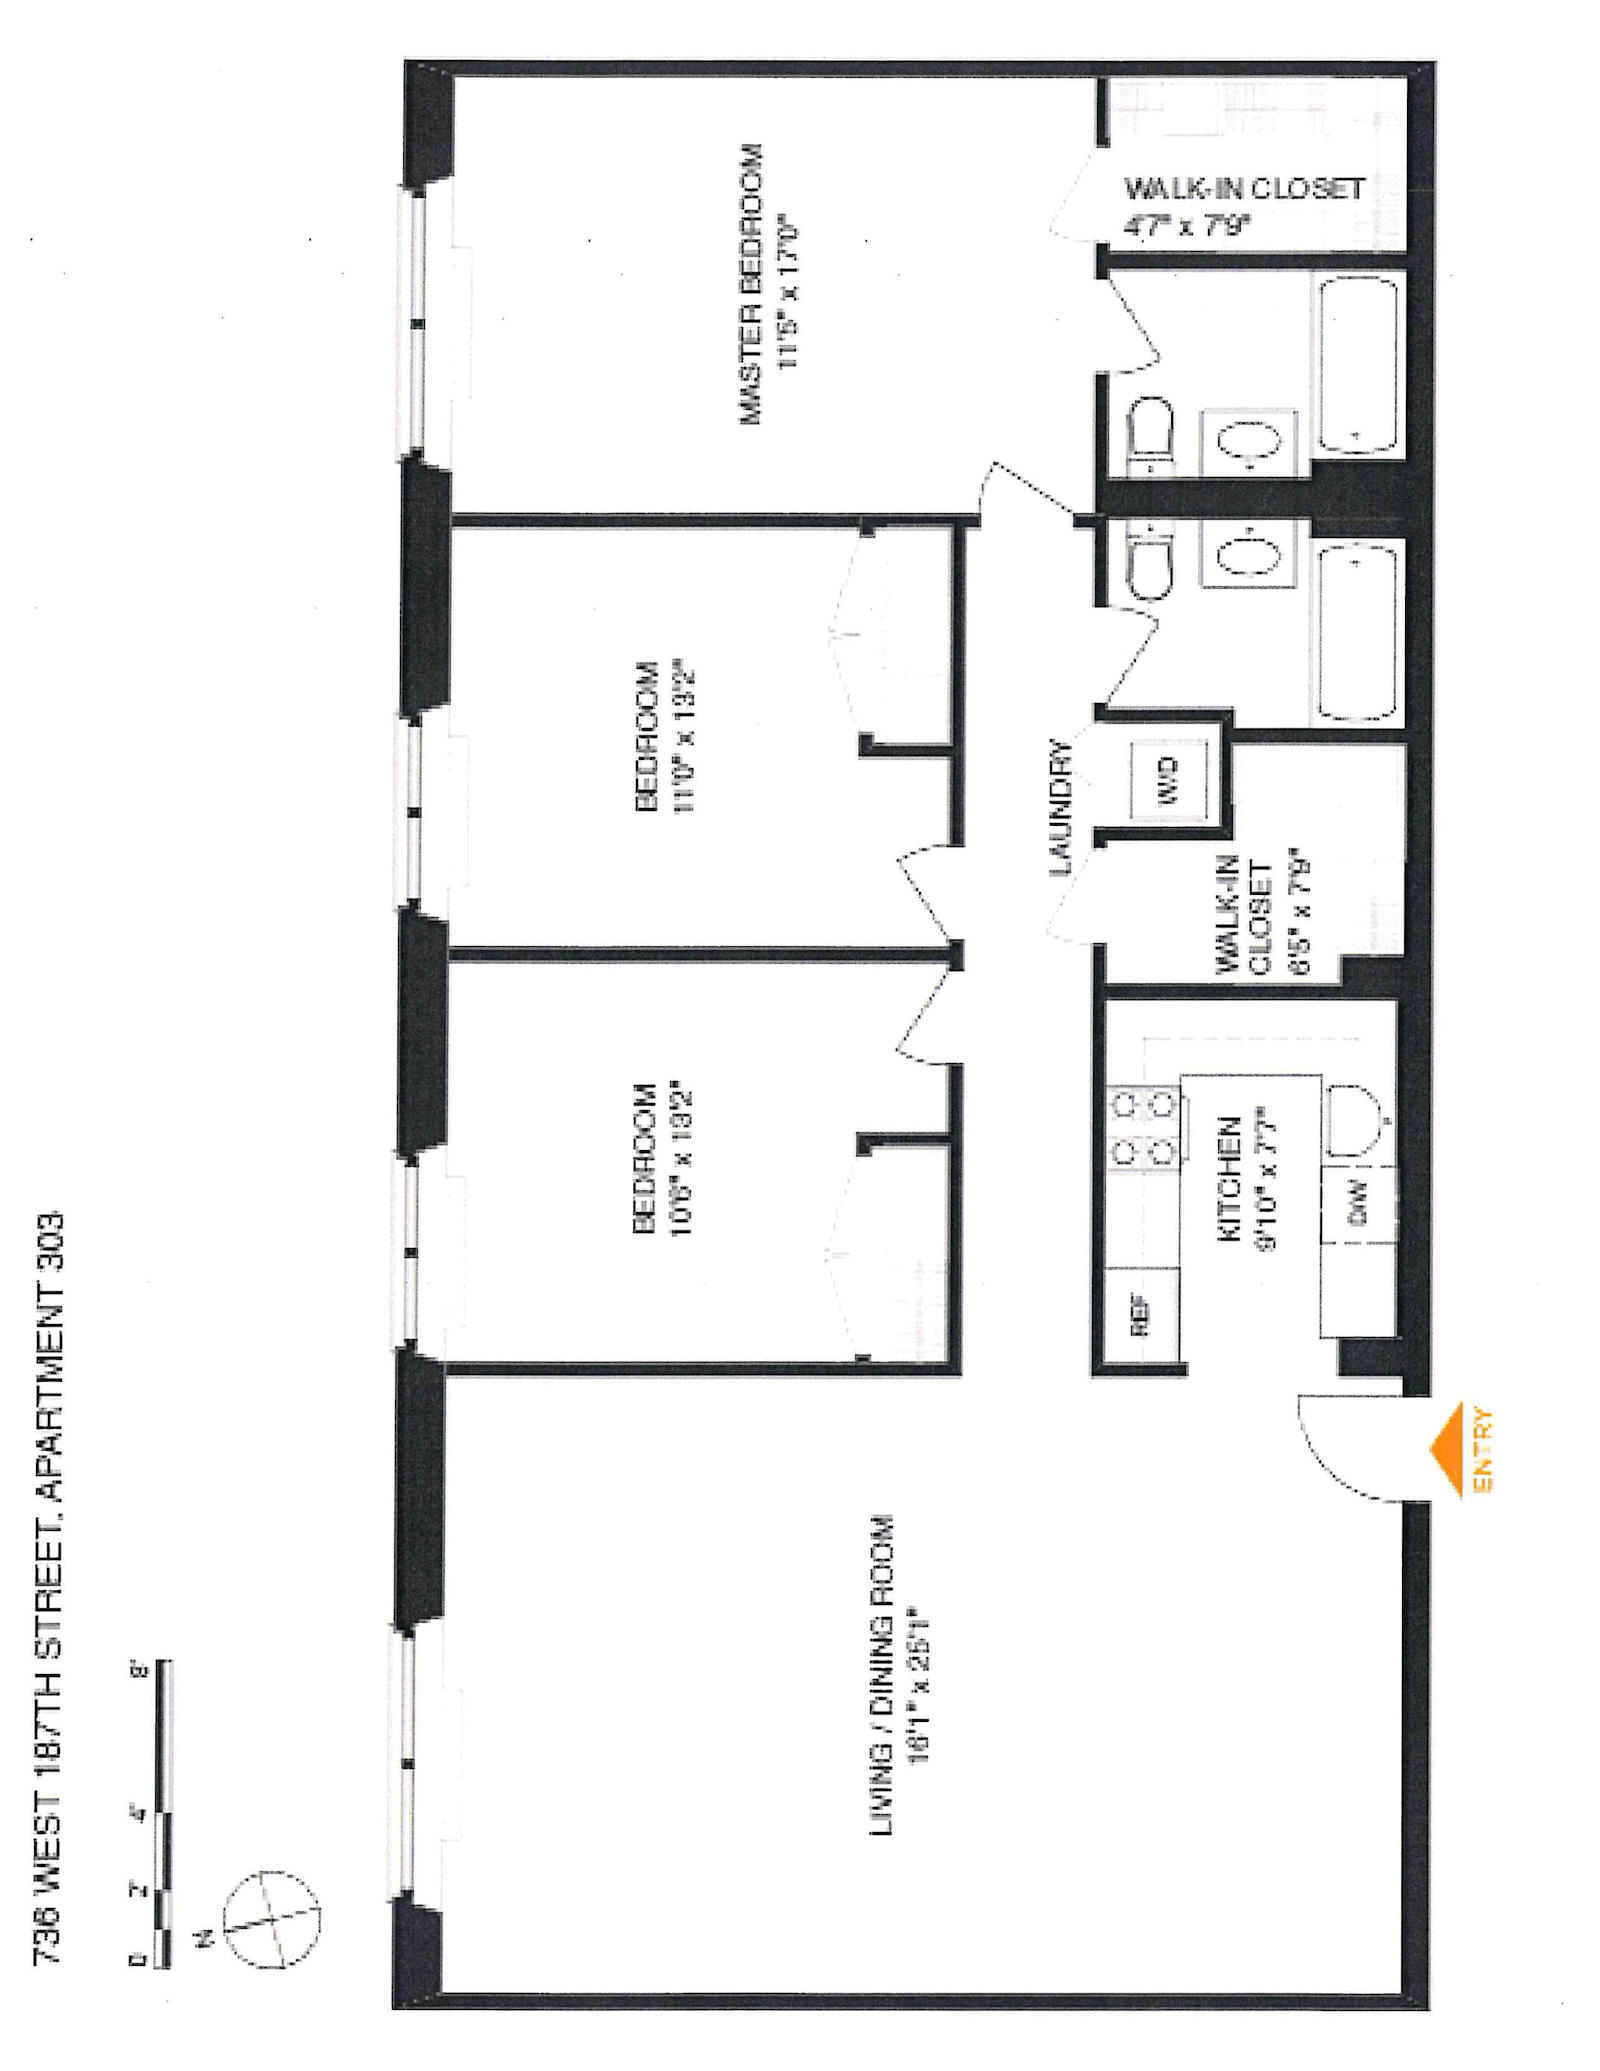 Floorplan for 736 West 187th Street